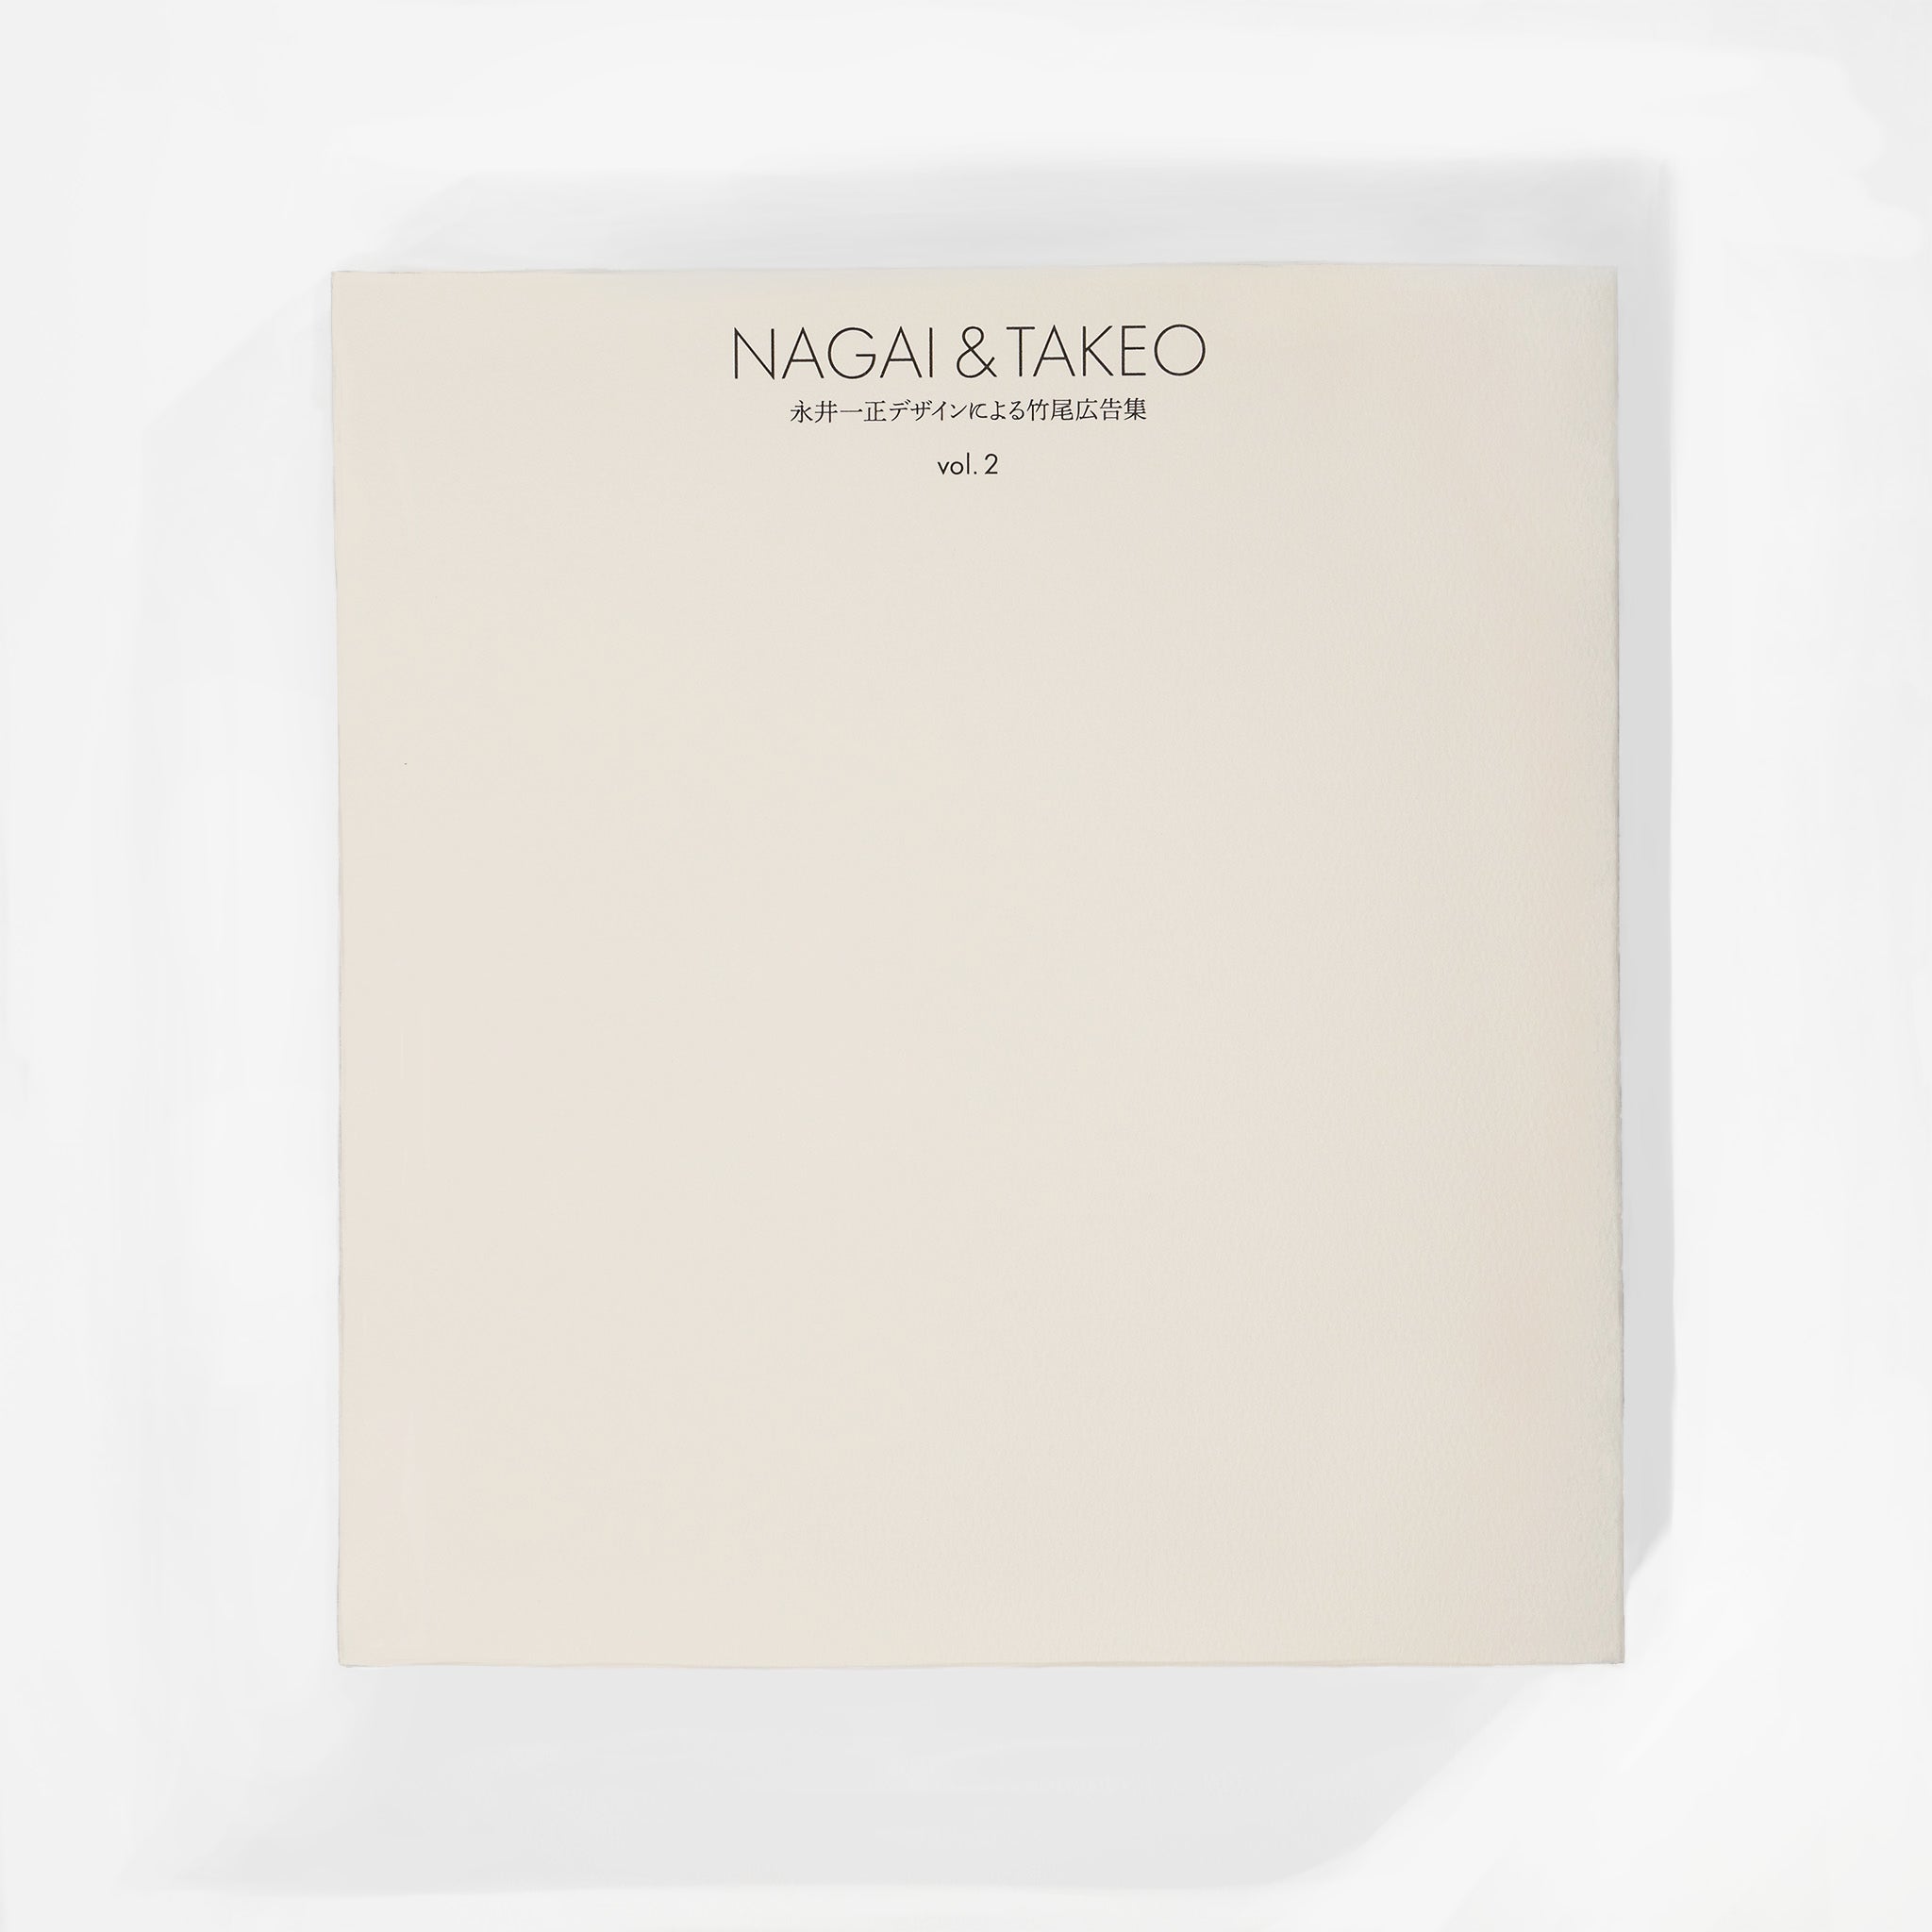 NAGAI & TAKEO 永井一正デザインによる竹尾広告集 vol.2,vol.3